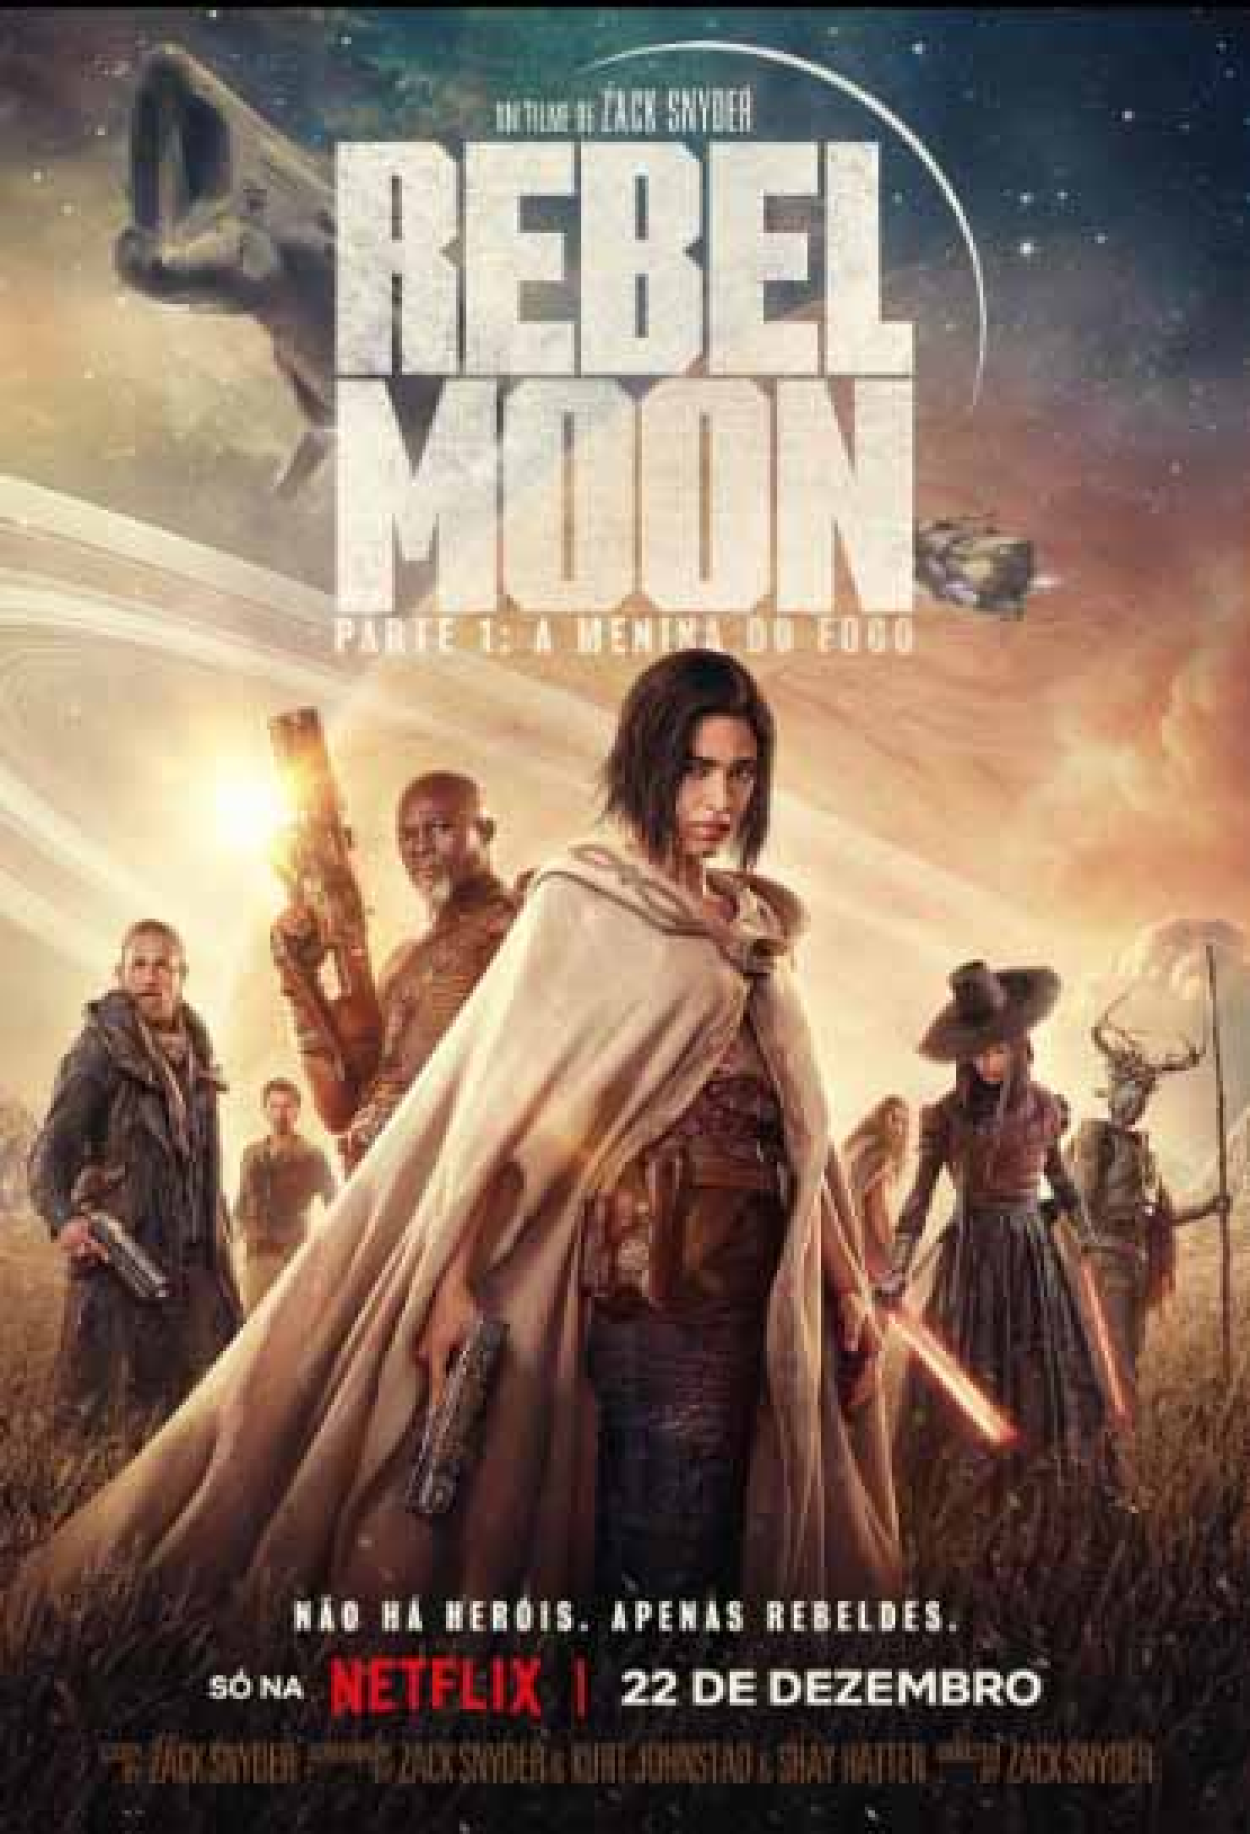 Rebel Moon - Parte 1: A Menina do Fogo: Veja sinopse, elenco e